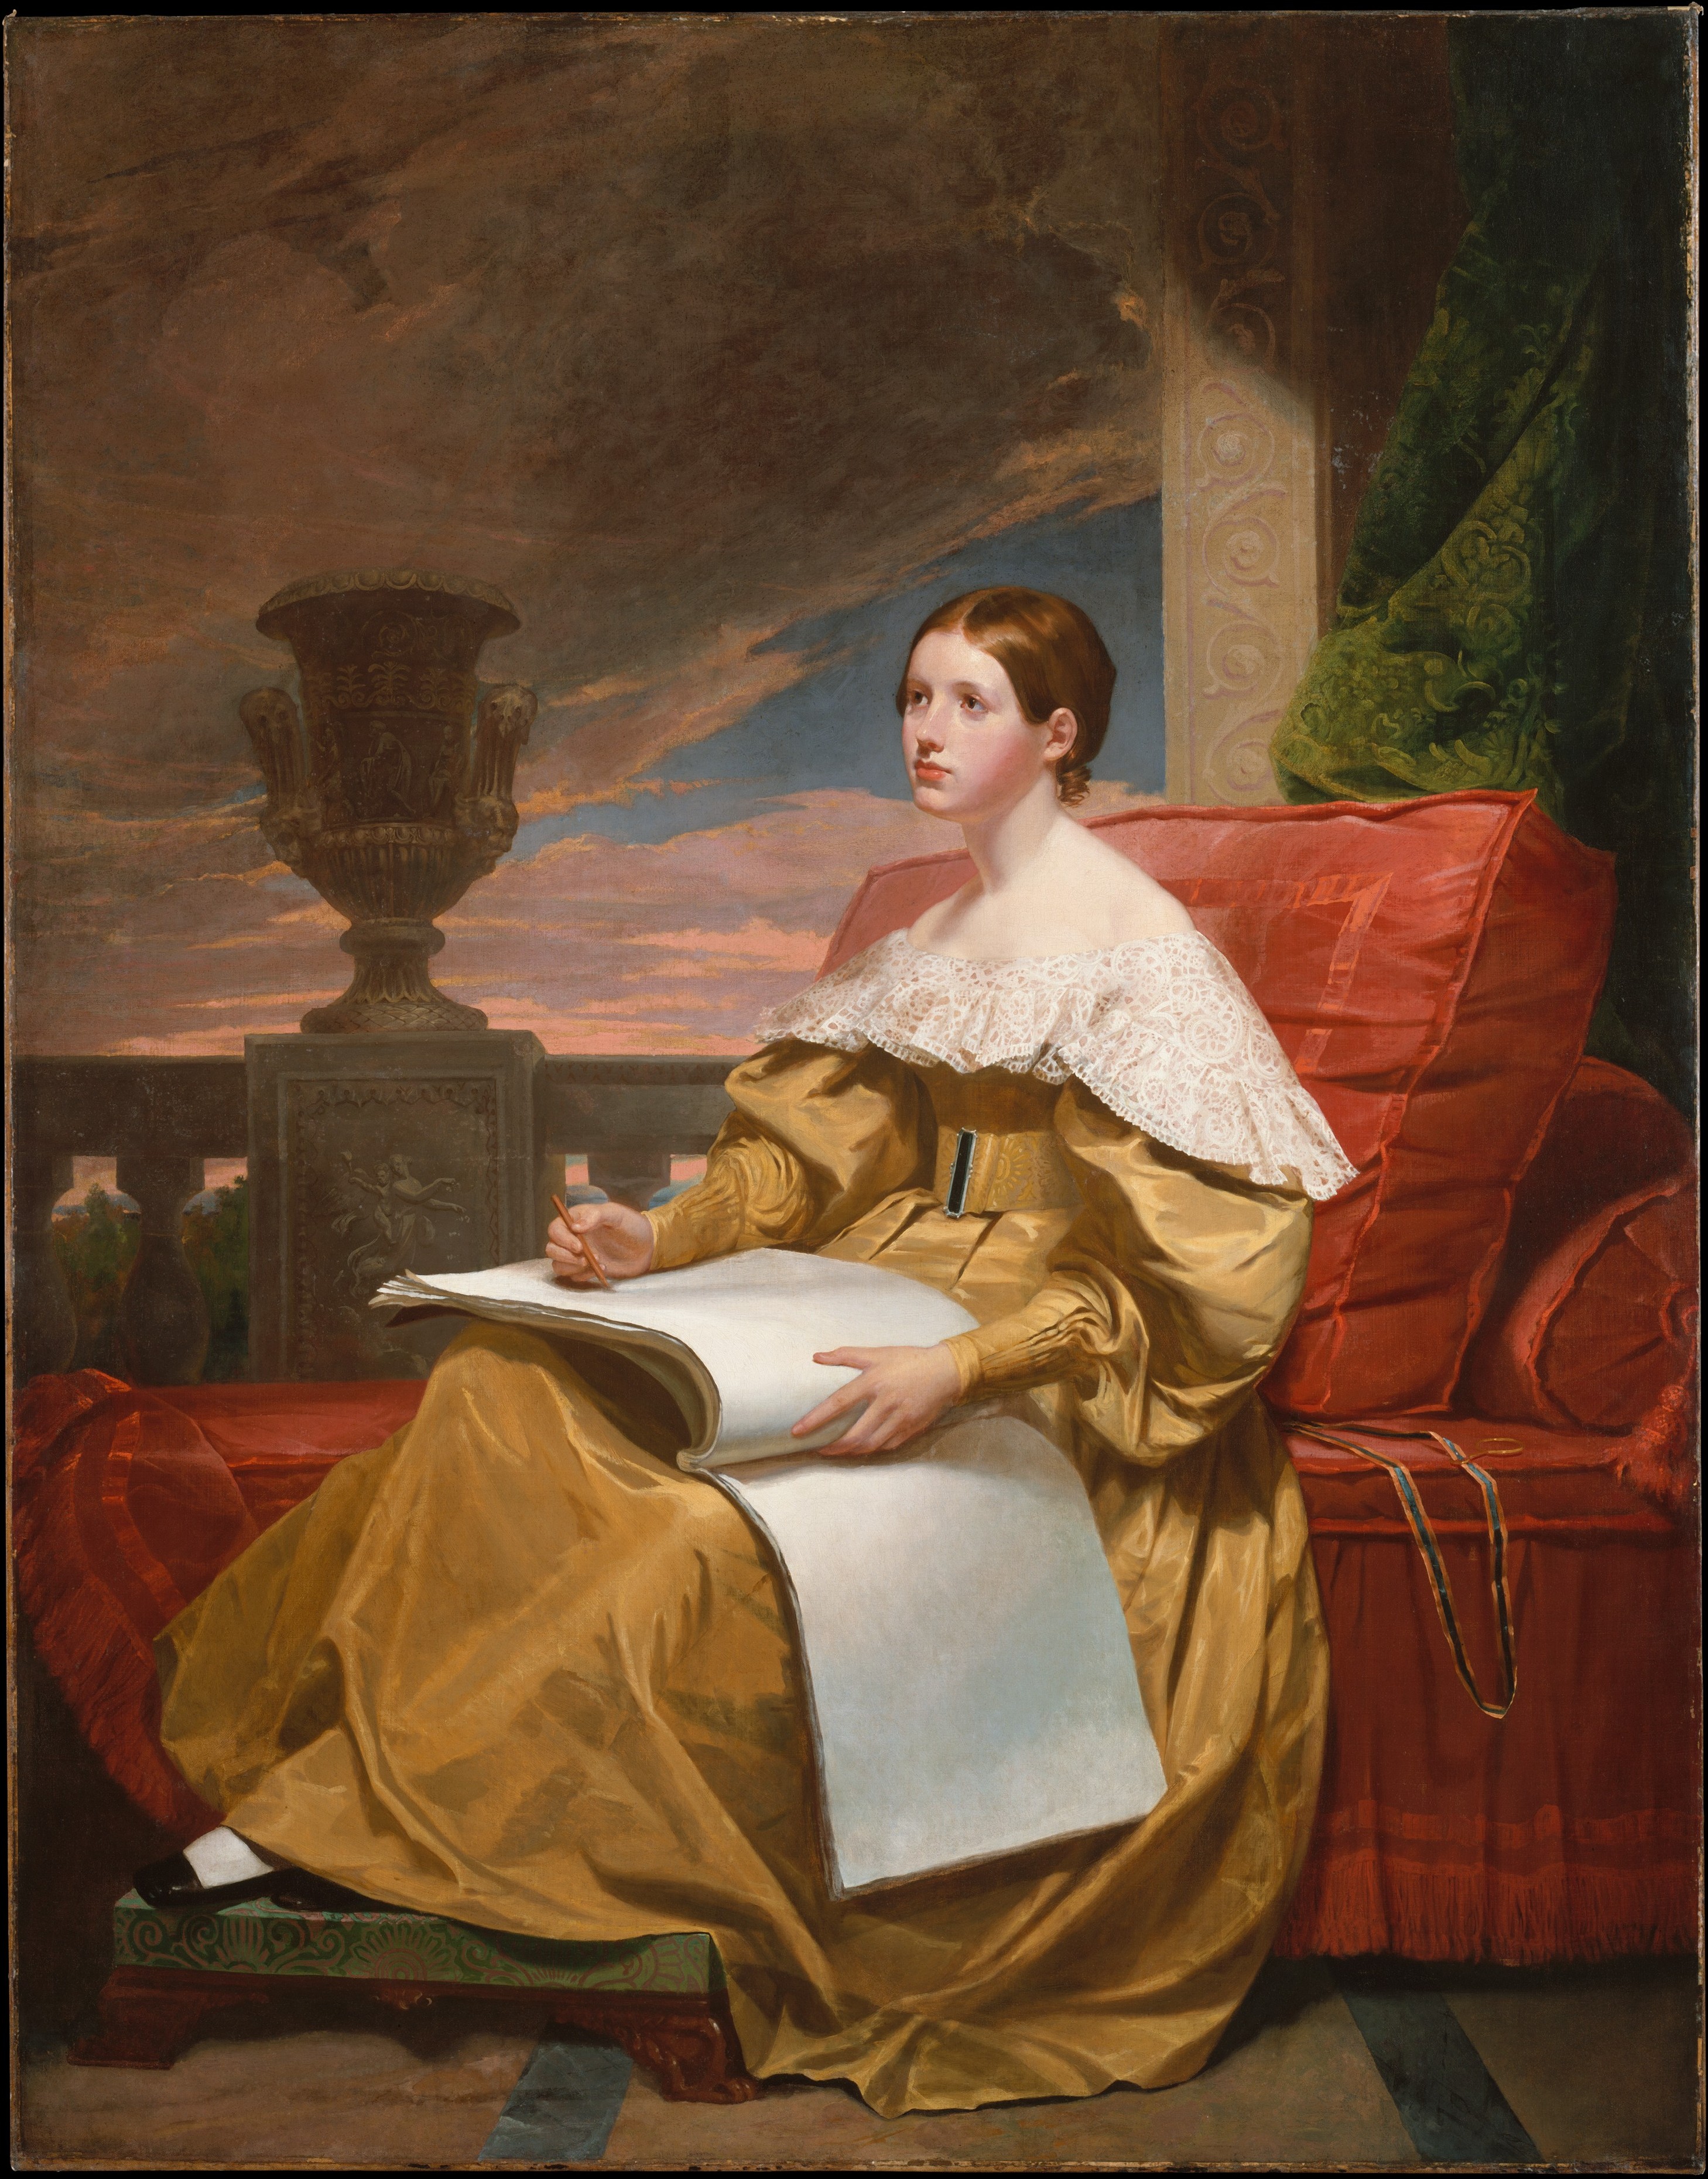 Susan Walker Morse (La Muse) by Samuel F. B. Morse - c. 1836-37 - 187.3 x 146.4 cm Metropolitan Museum of Art